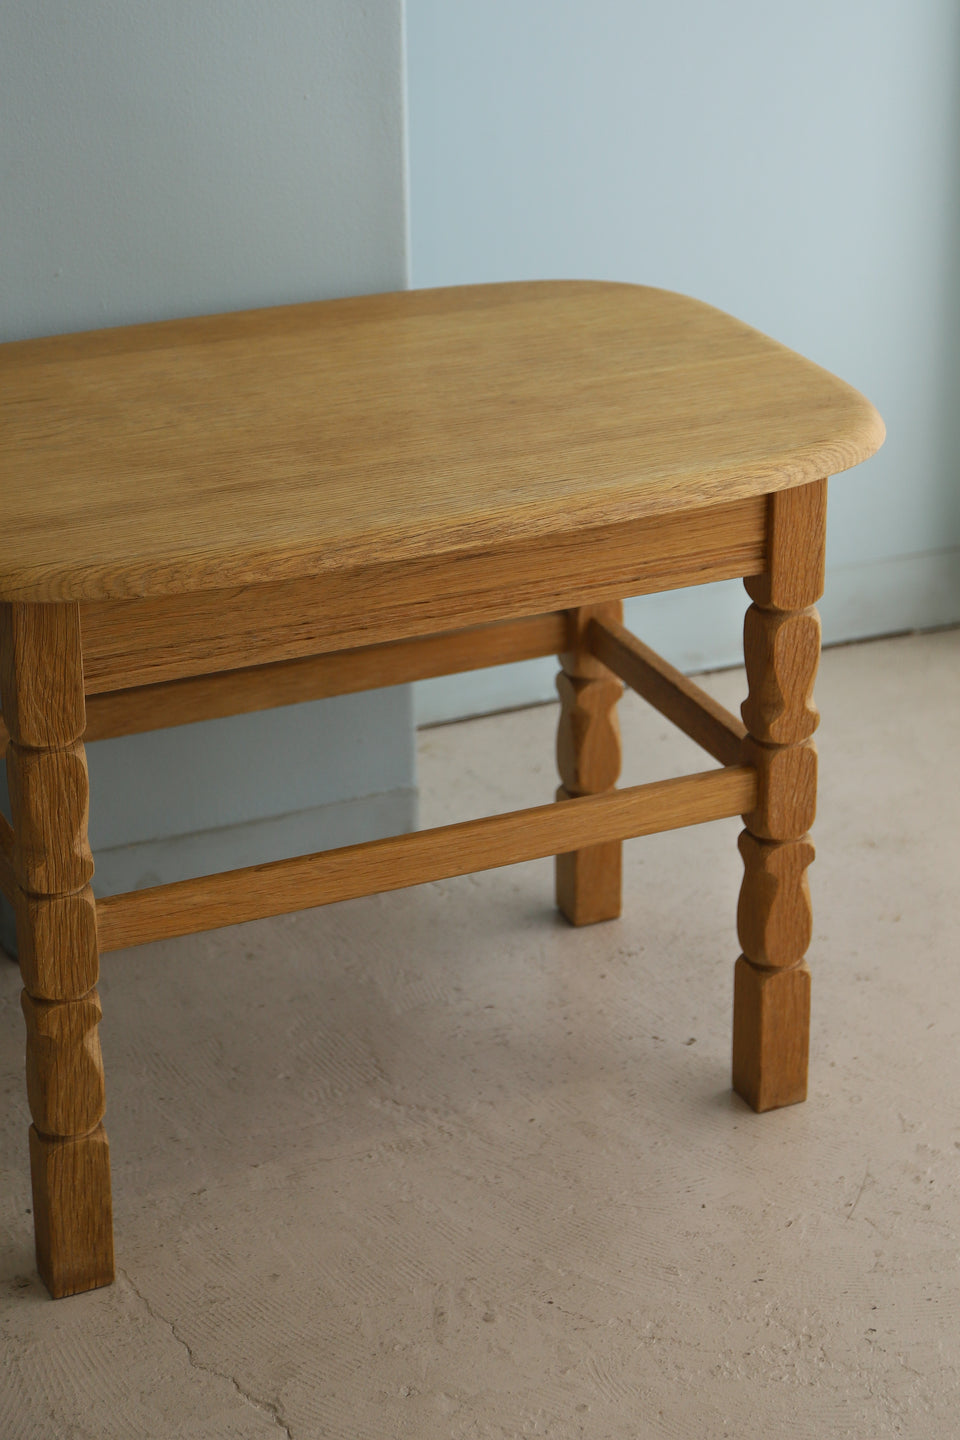 Oakwood Side Table Danish Vintage/デンマークヴィンテージ オーク材 サイドテーブル 北欧家具